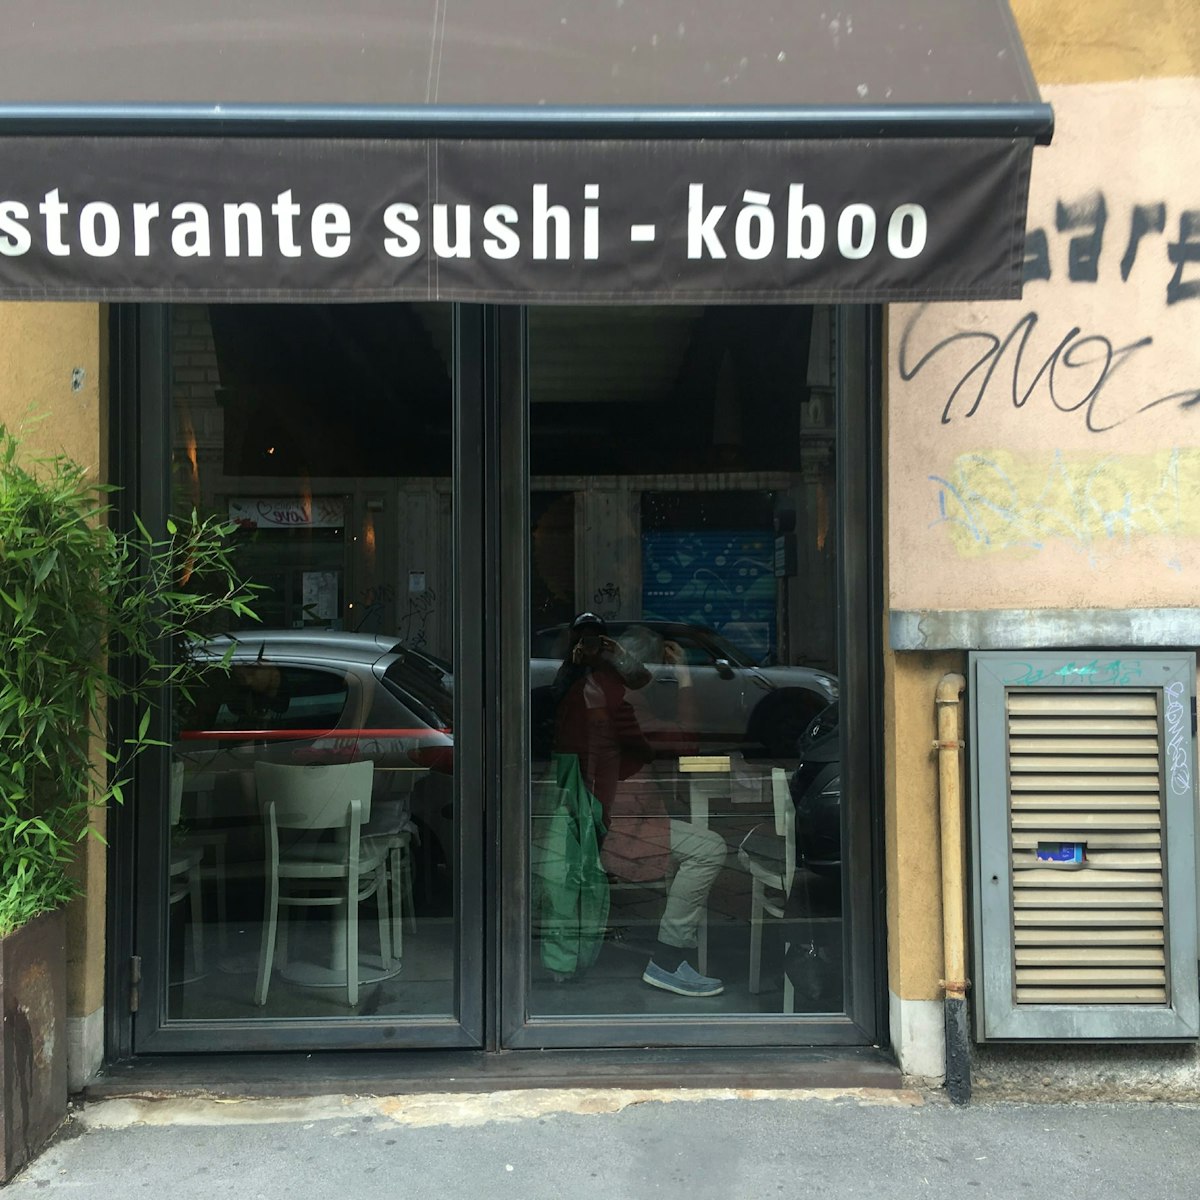 Sushi Kòboo restaurant entrance